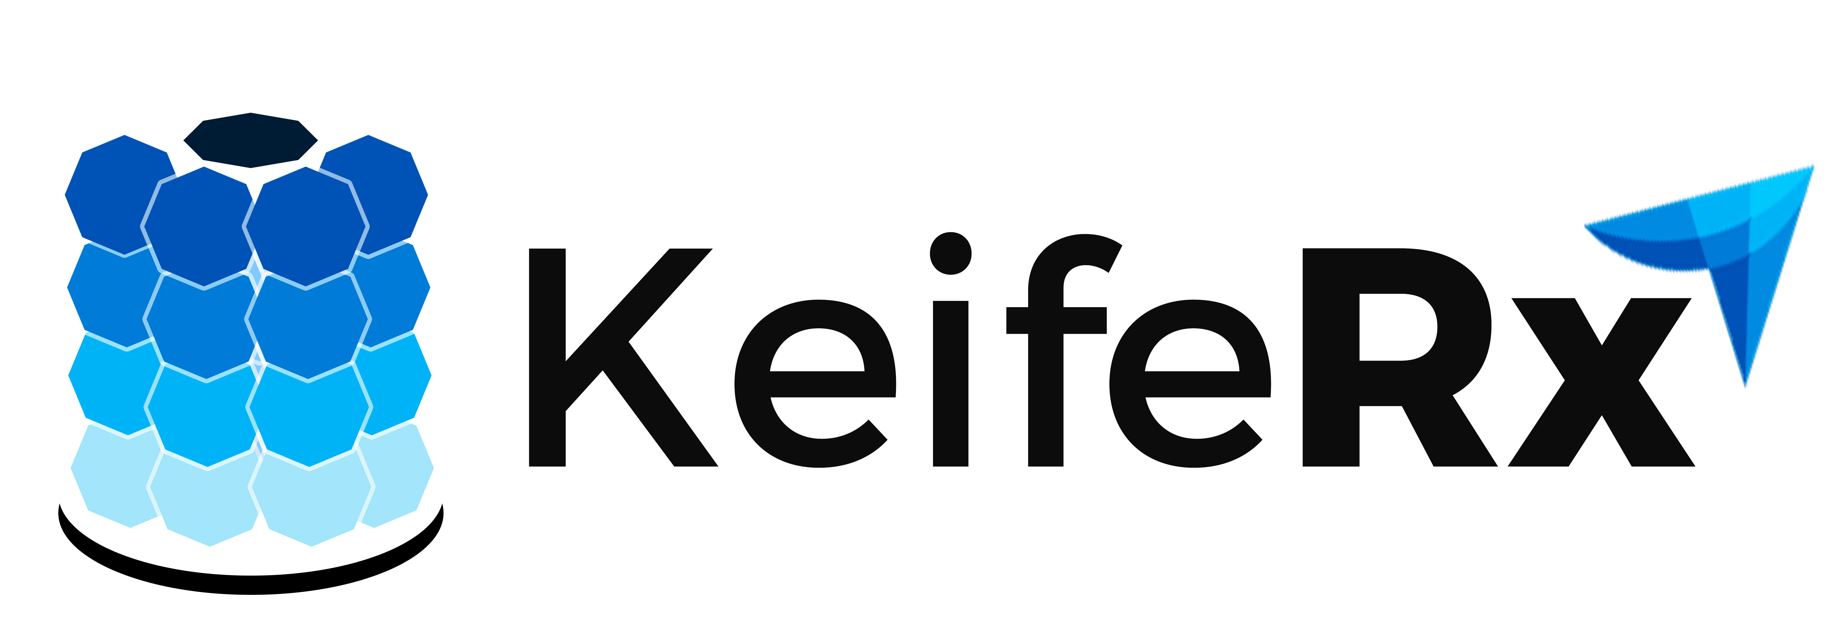 Keifre Rx Full Color Logo Compressed.JPG